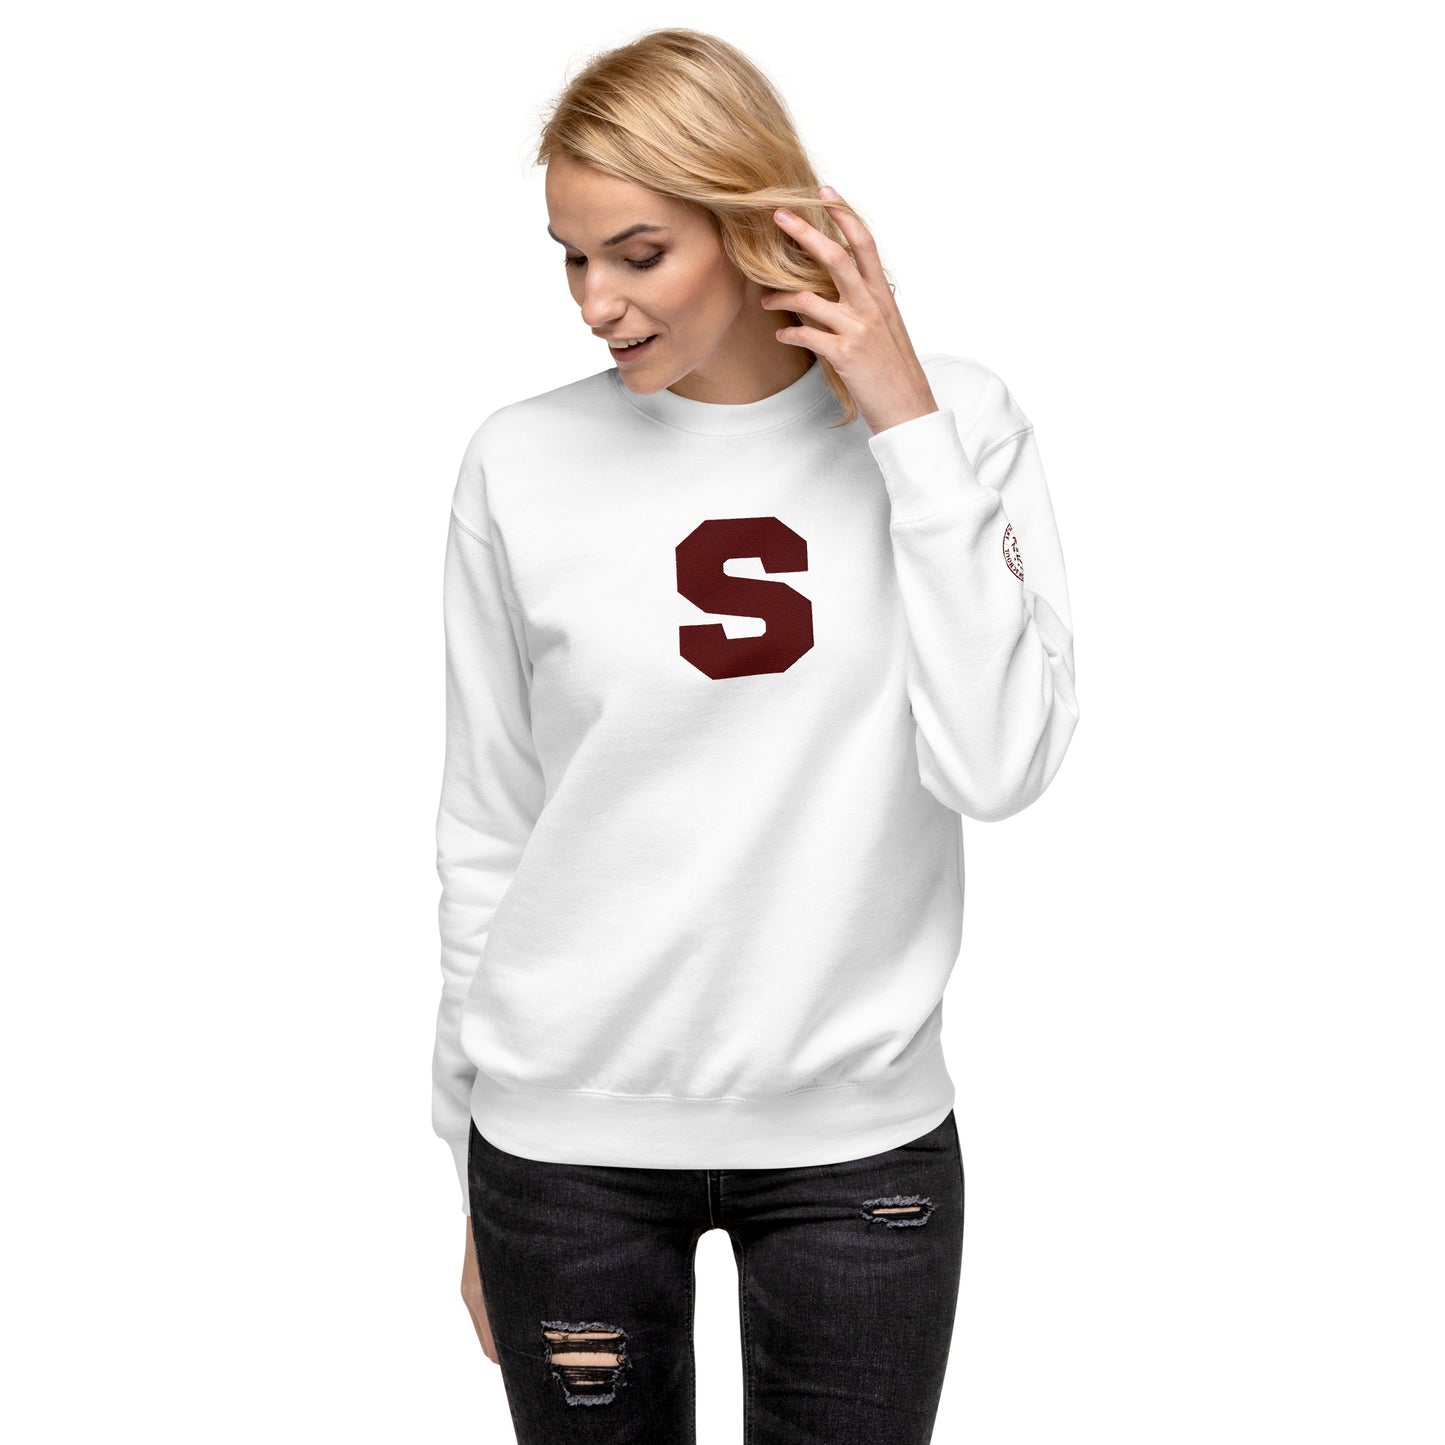 The St. Saviour 'S' Premium Sweatshirt